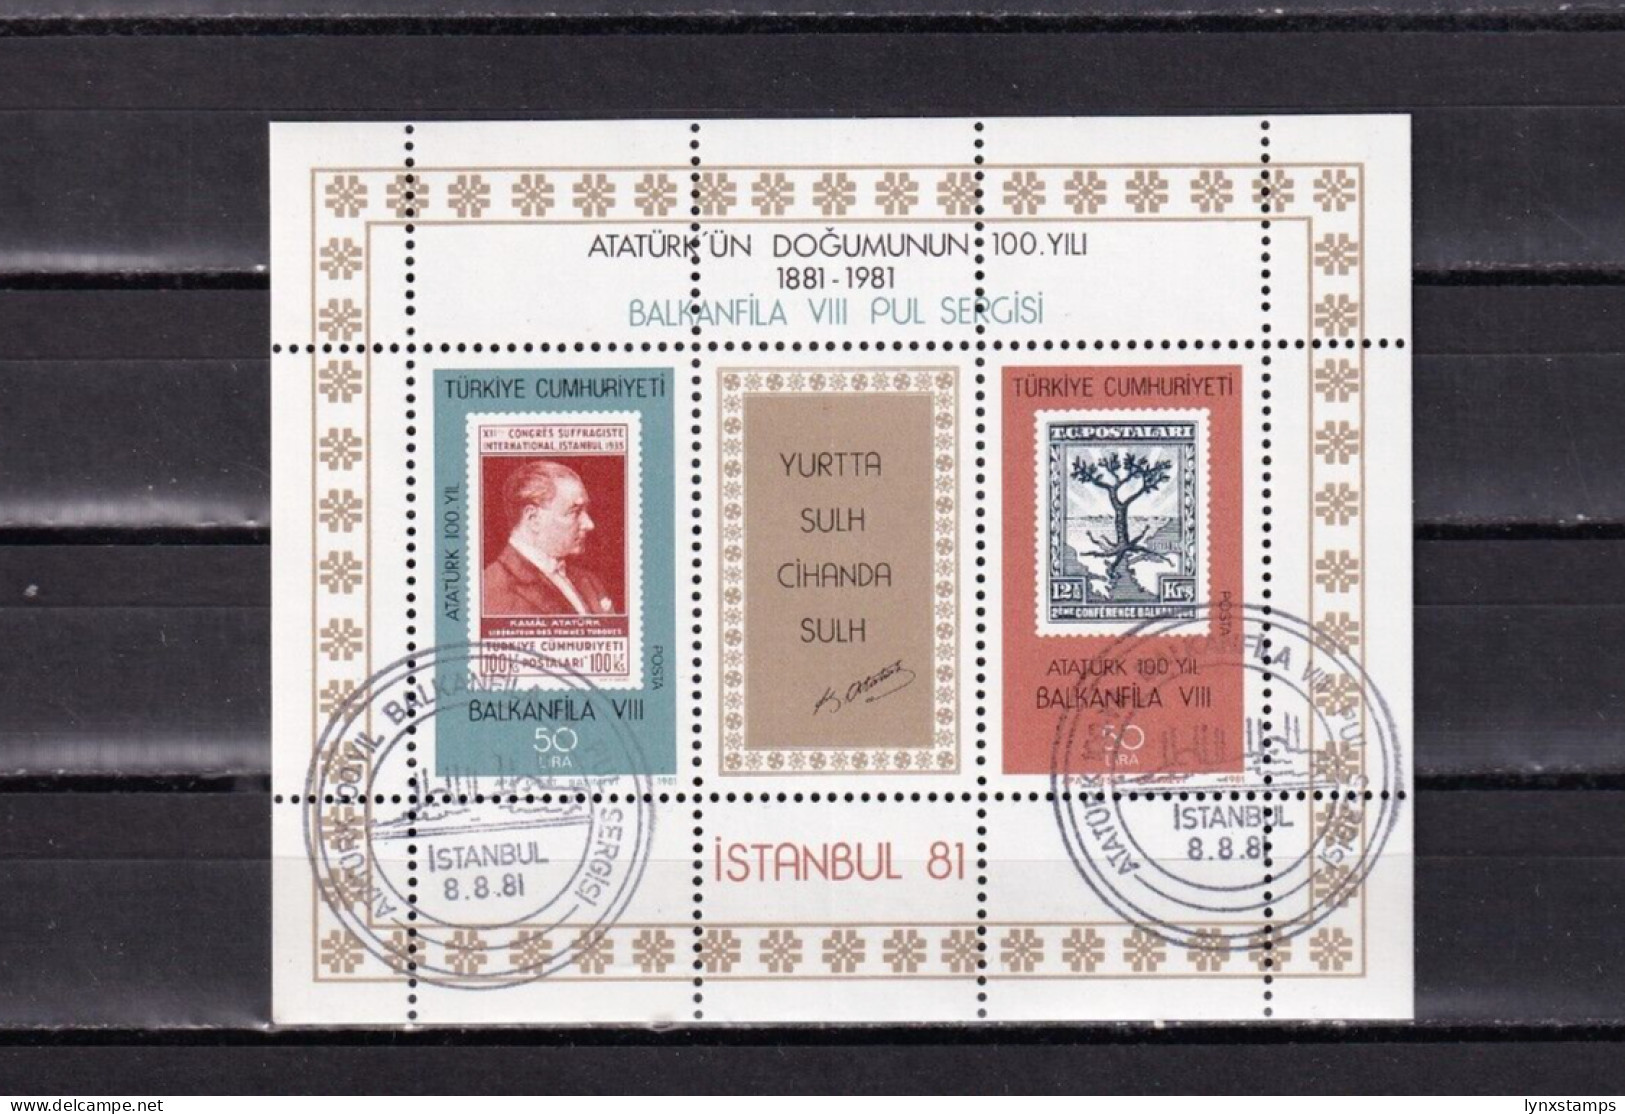 SA03 Turkey 1981 Balkanfila VIII Stamp Exhibition, Ankara Minisheet Used - Gebraucht